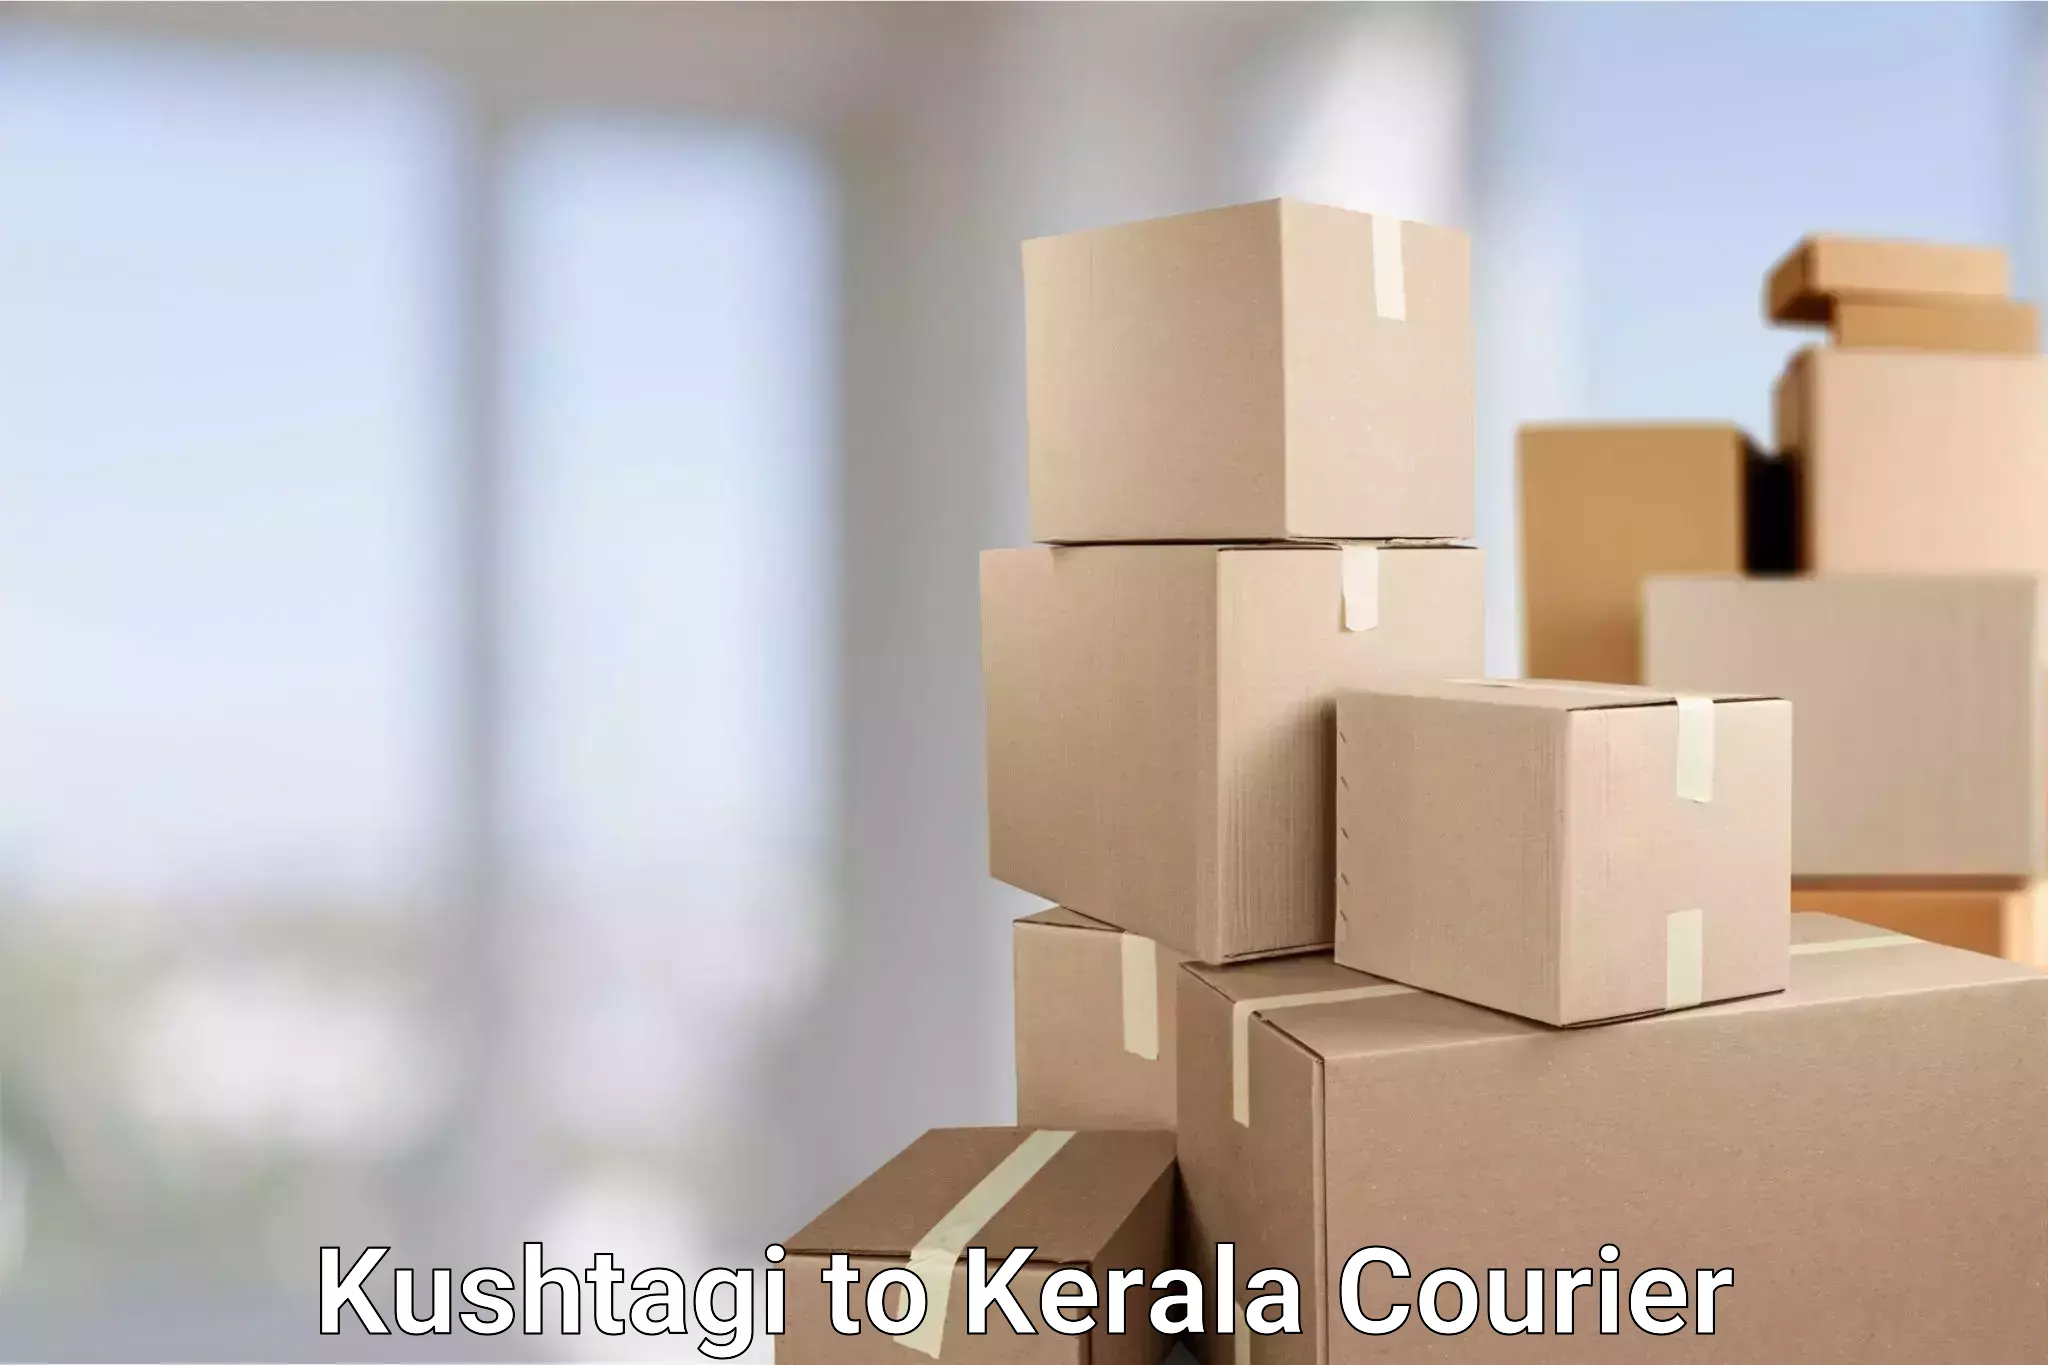 Professional courier services in Kushtagi to Malappuram